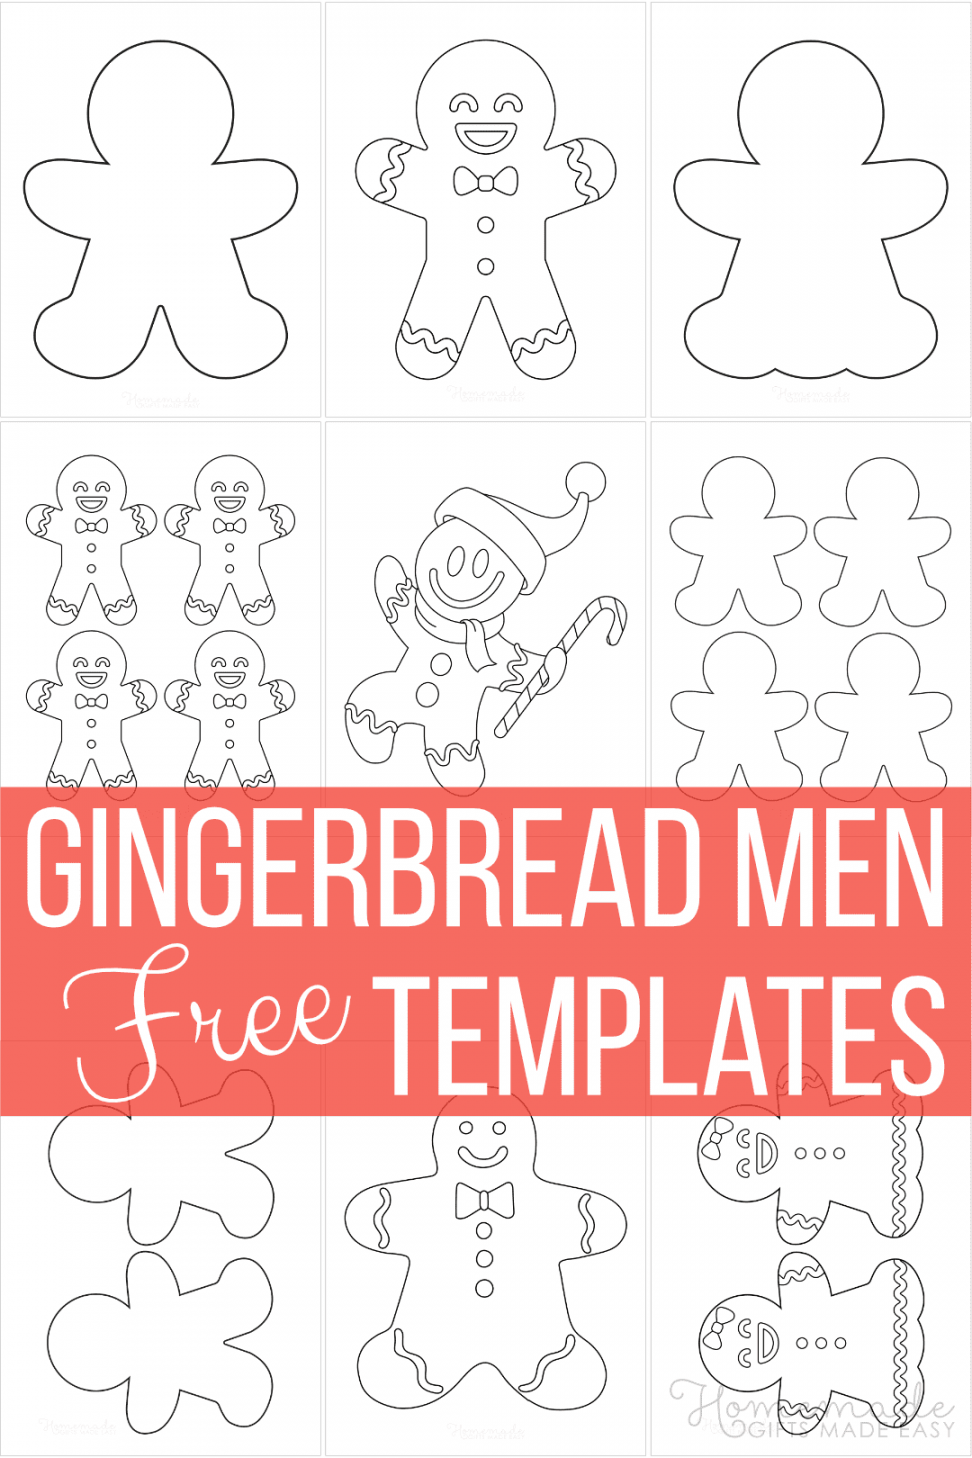 Free Printable Gingerbread Man Templates & Coloring Pages - FREE Printables - Gingerbread Stencils